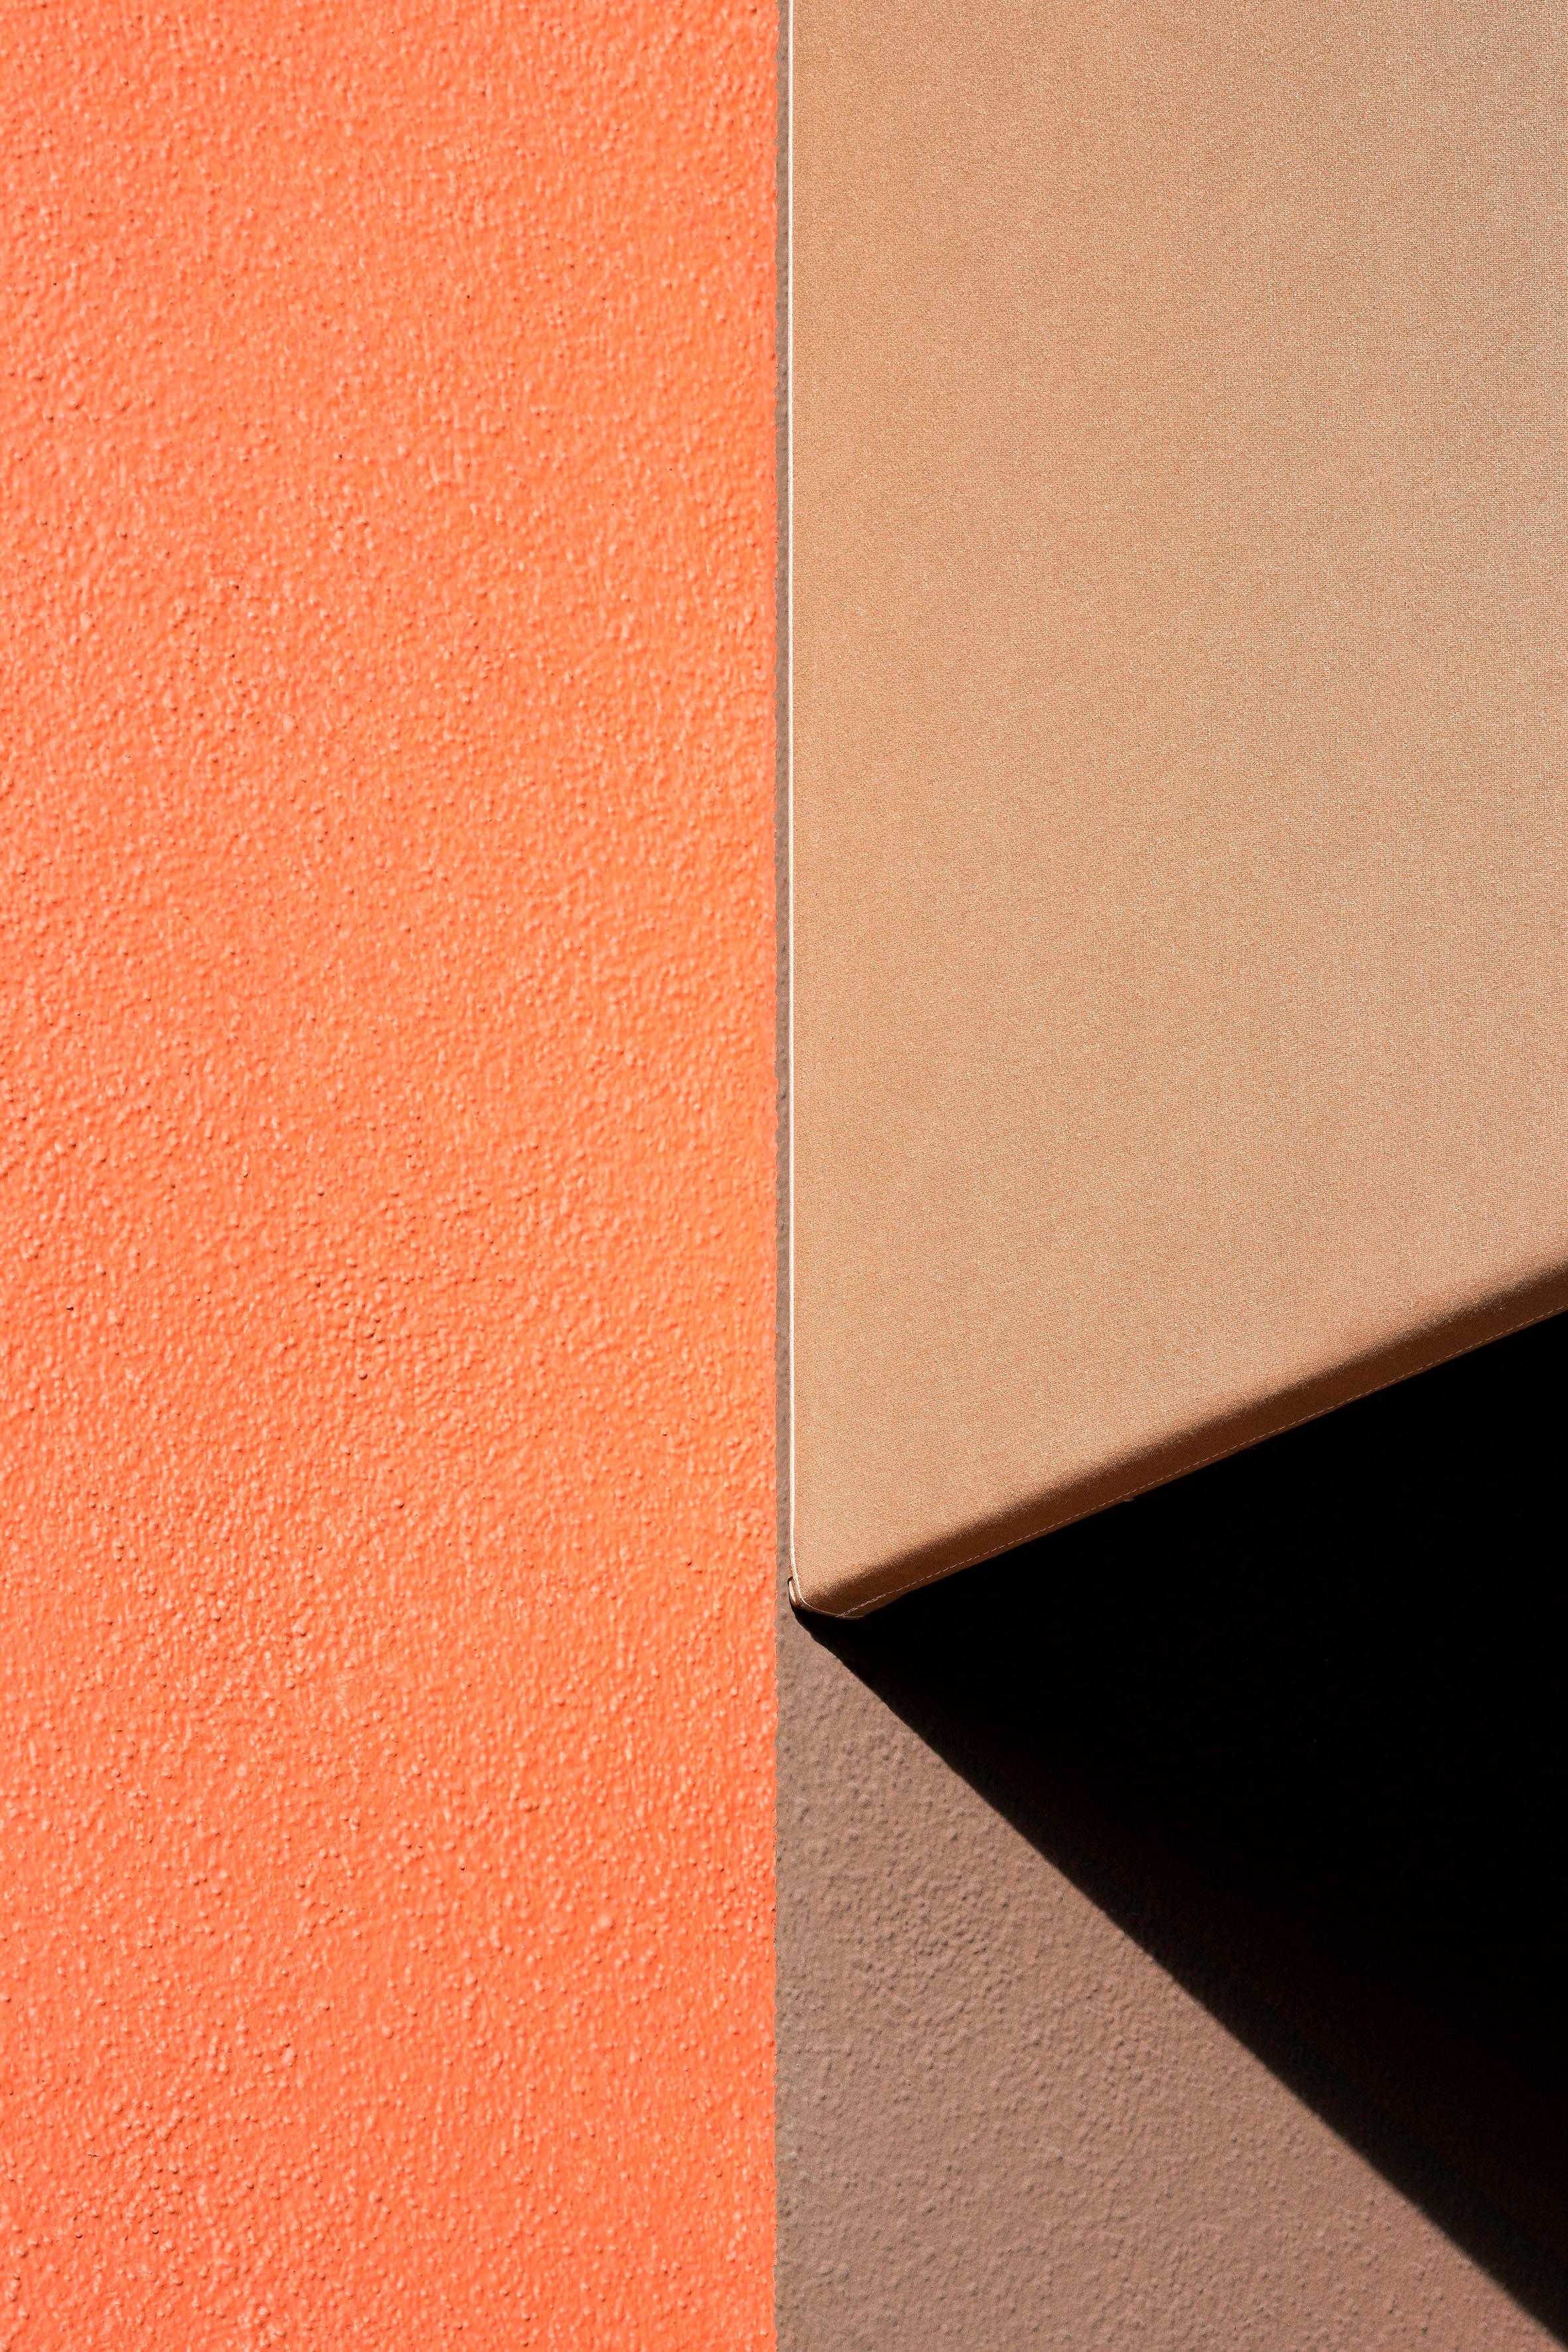 Jon Setter Color Photograph - Orange Brown and Black - focuses on mundane urban landscape, Photographic